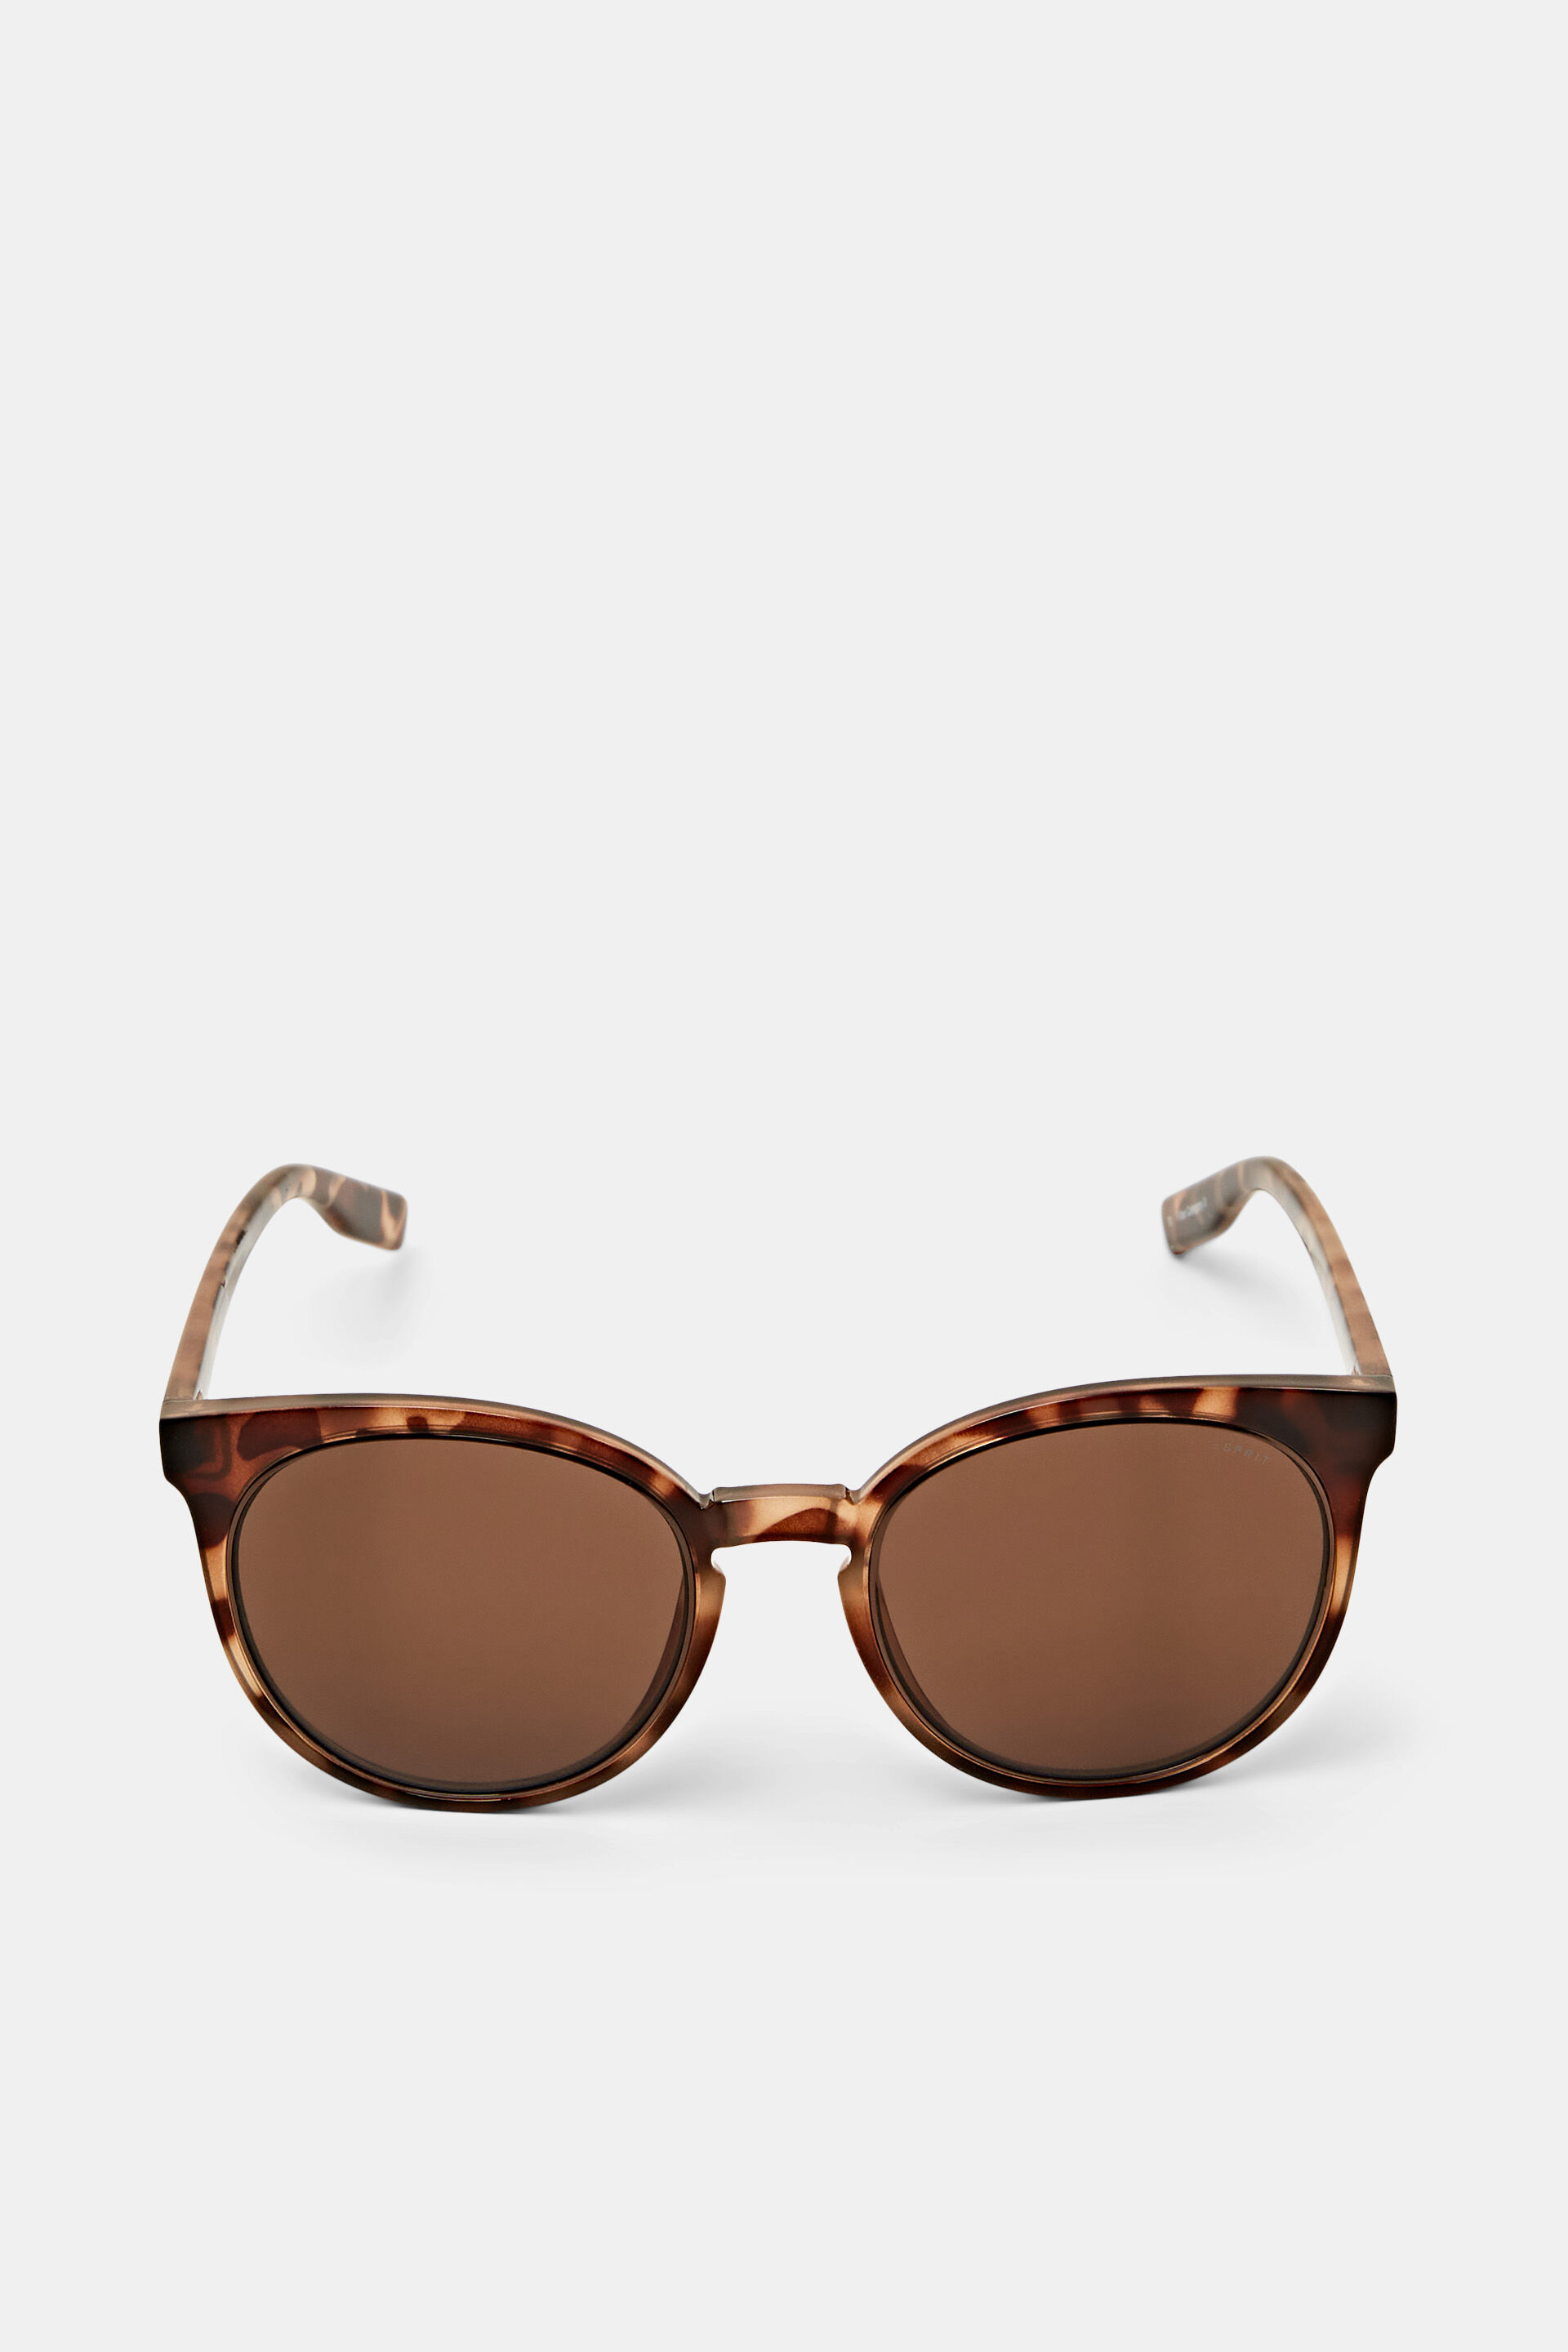 Round framed statement sunglasses